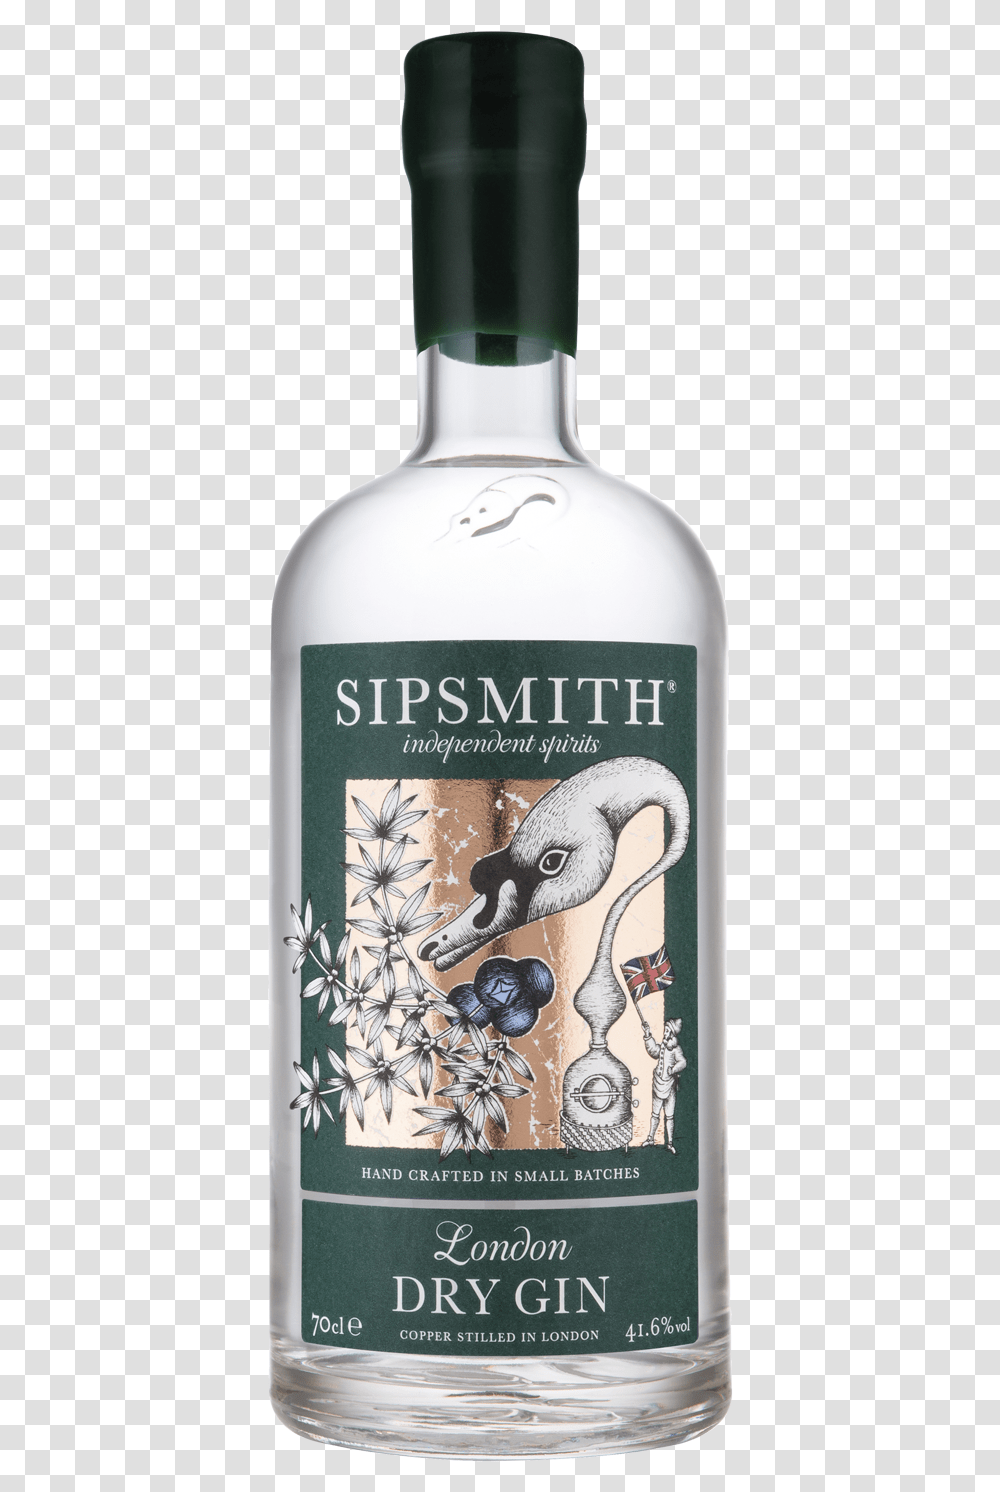 Sipsmith London Dry Gin Glass Bottle, Liquor, Alcohol, Beverage, Drink Transparent Png